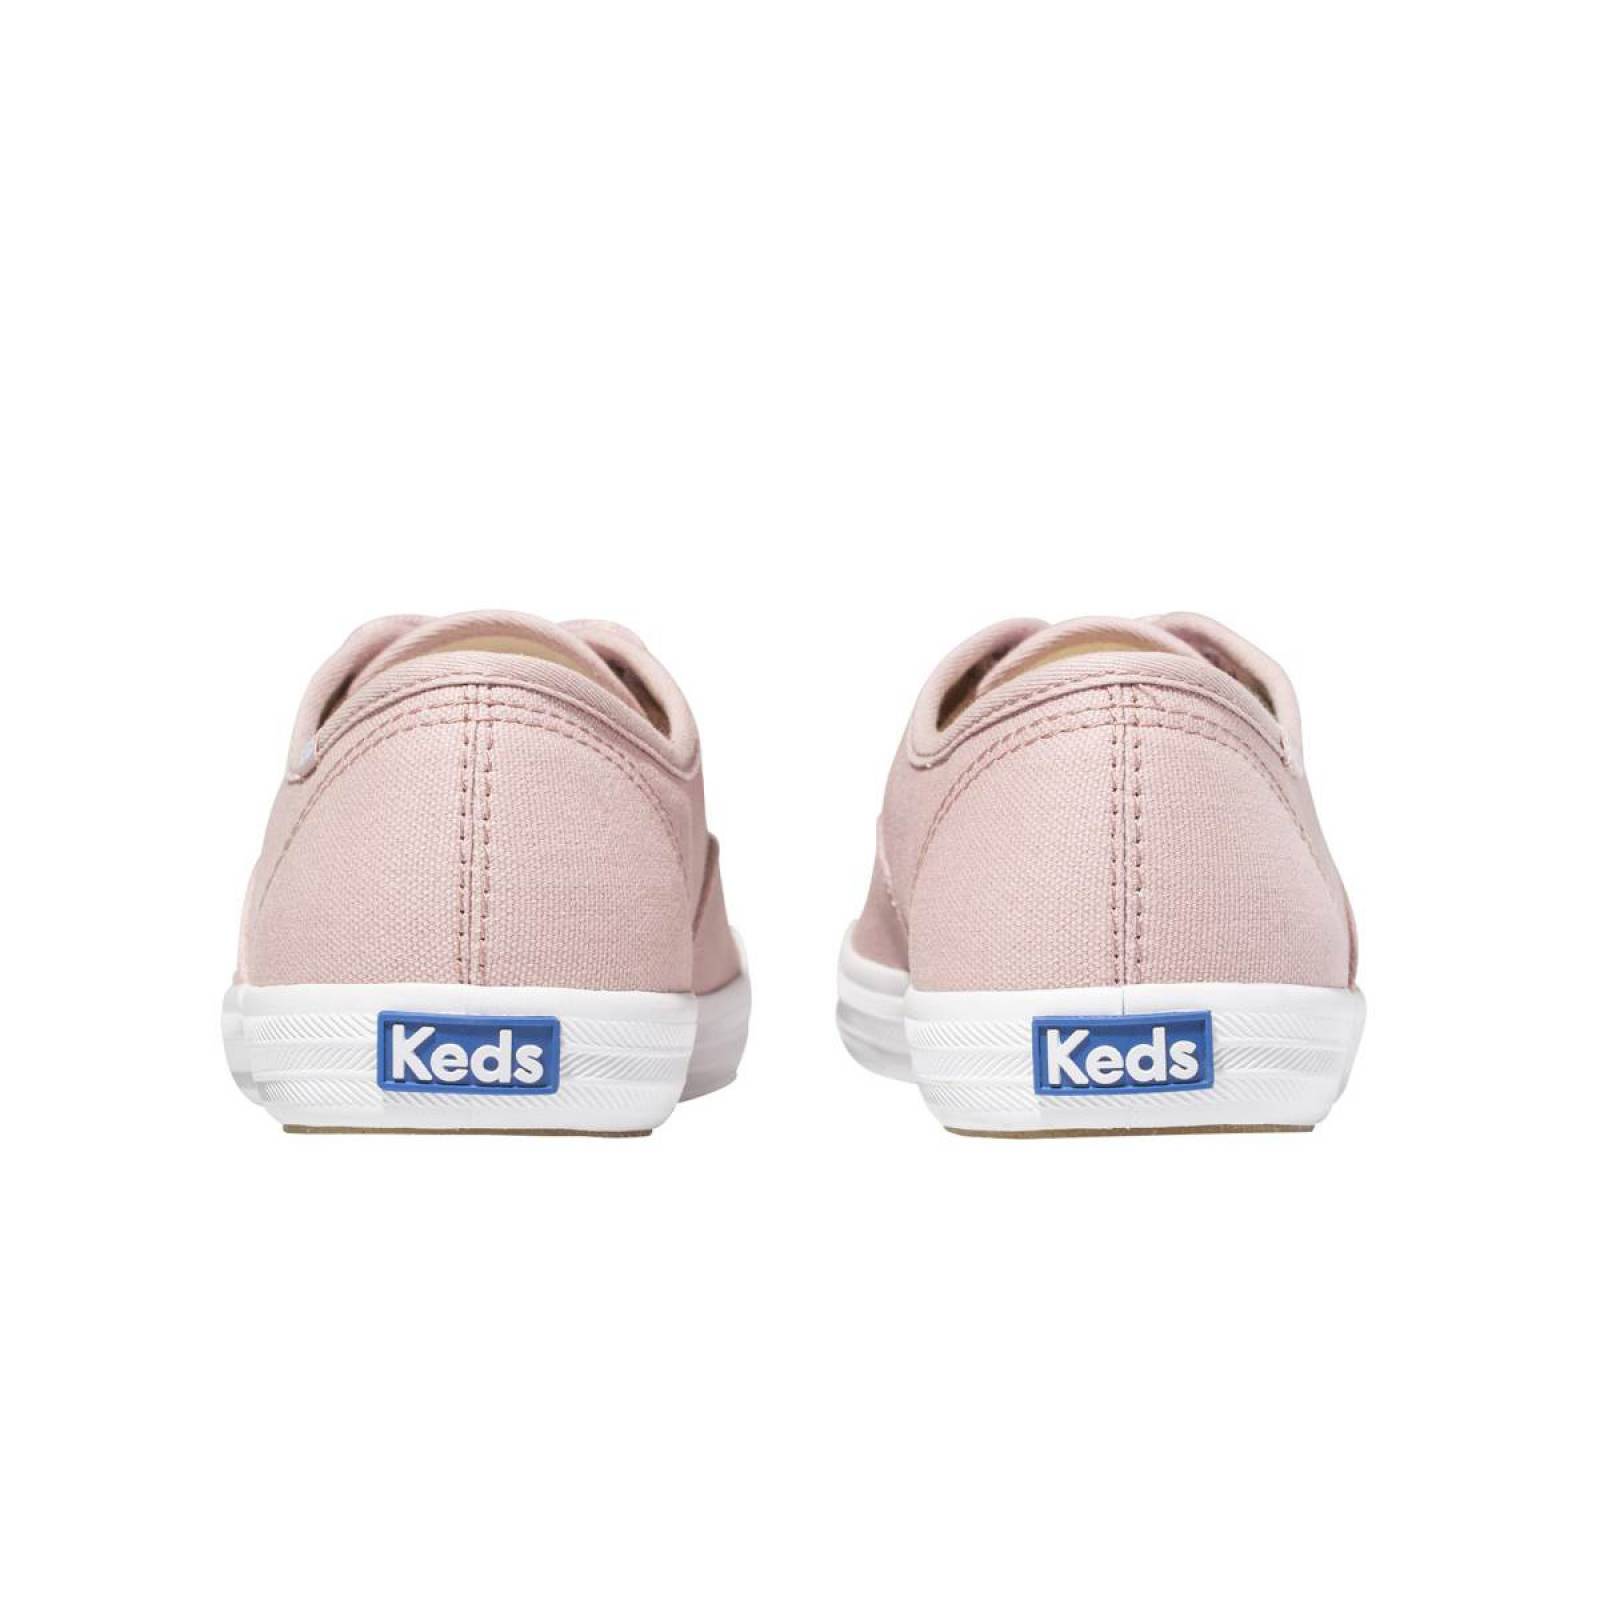 Tenis para Dama Keds modelo WF64026 color rosa, composición lona